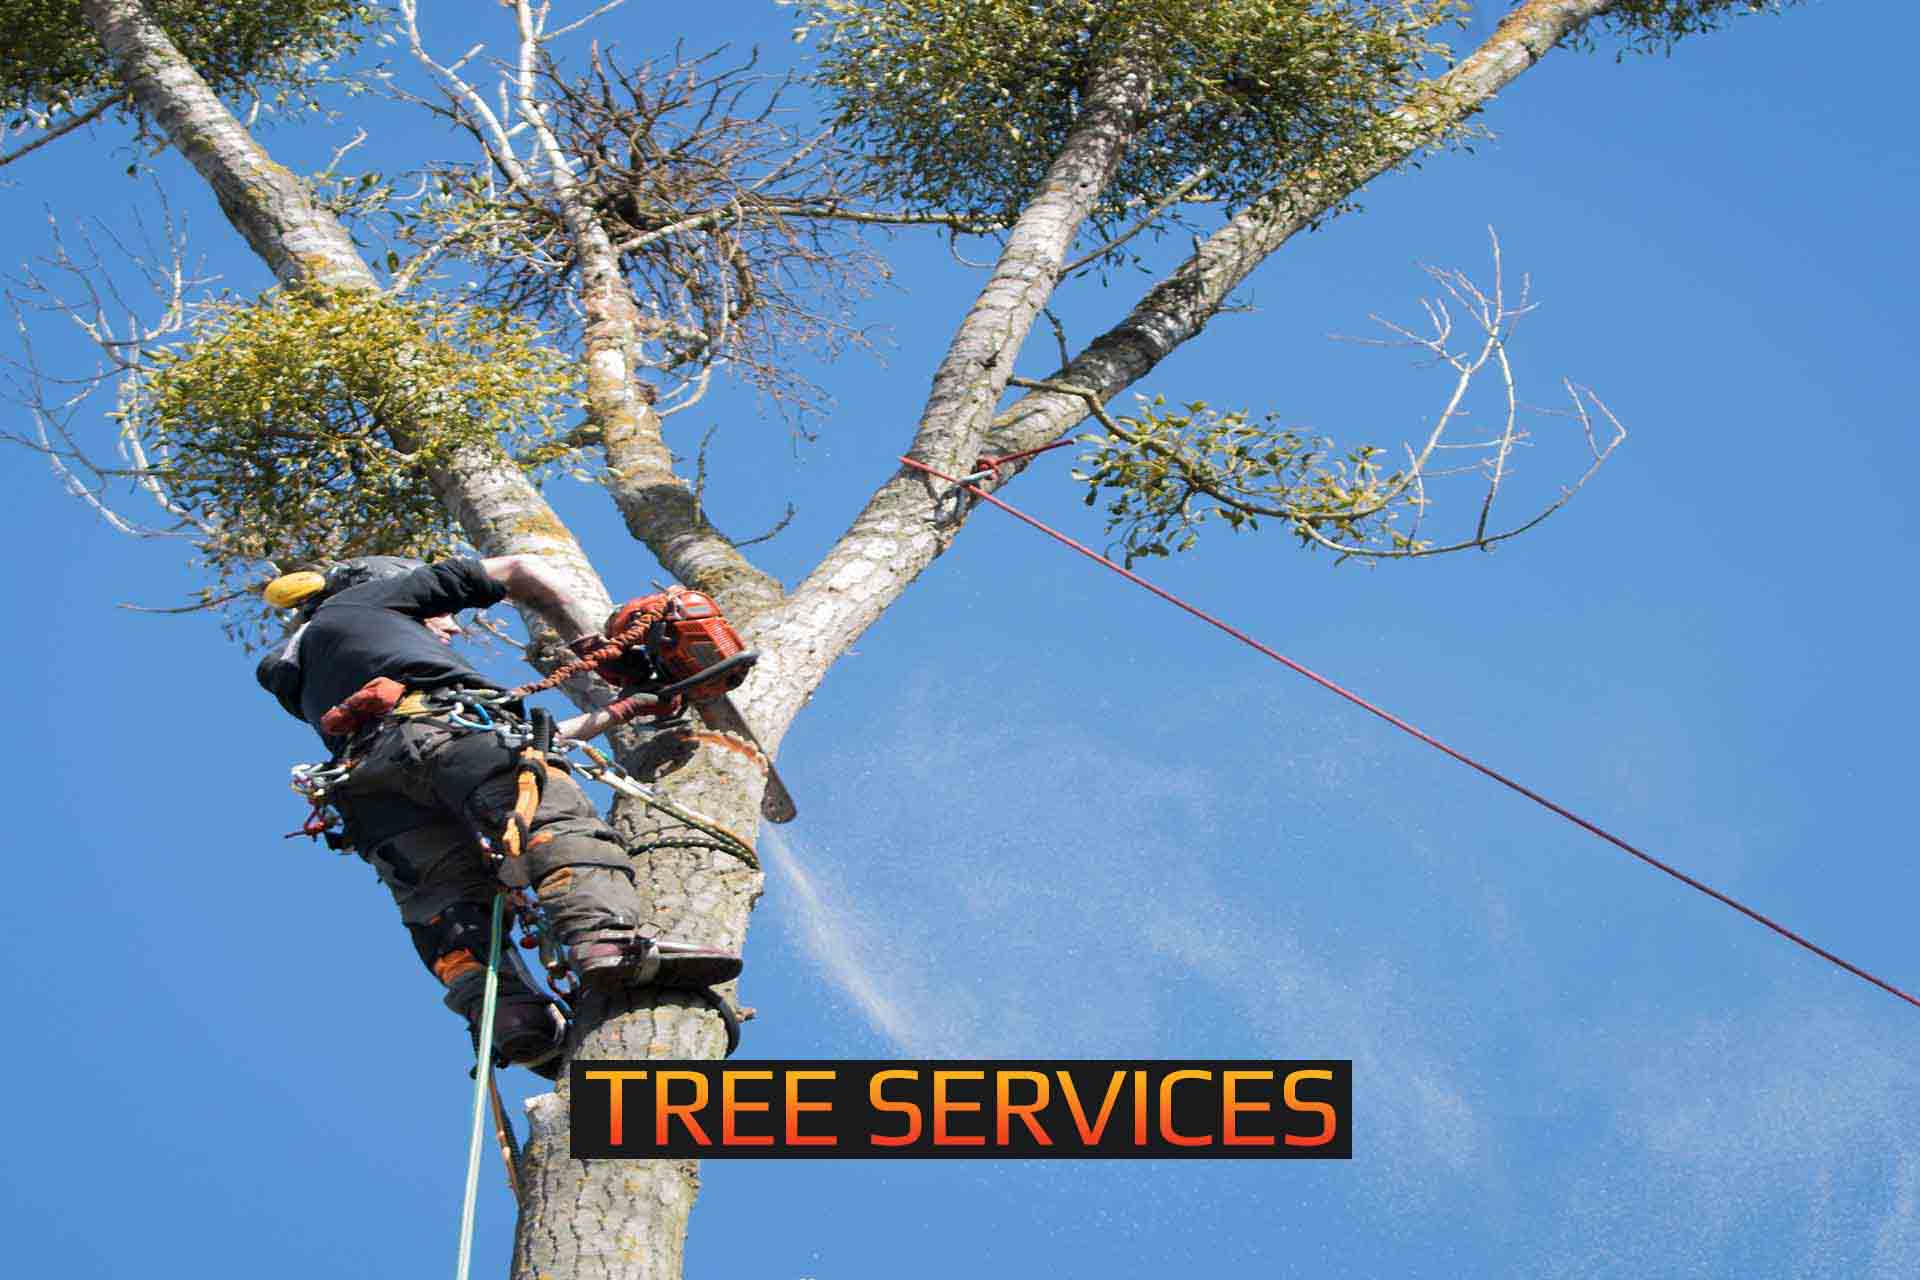 TREE SERVICES